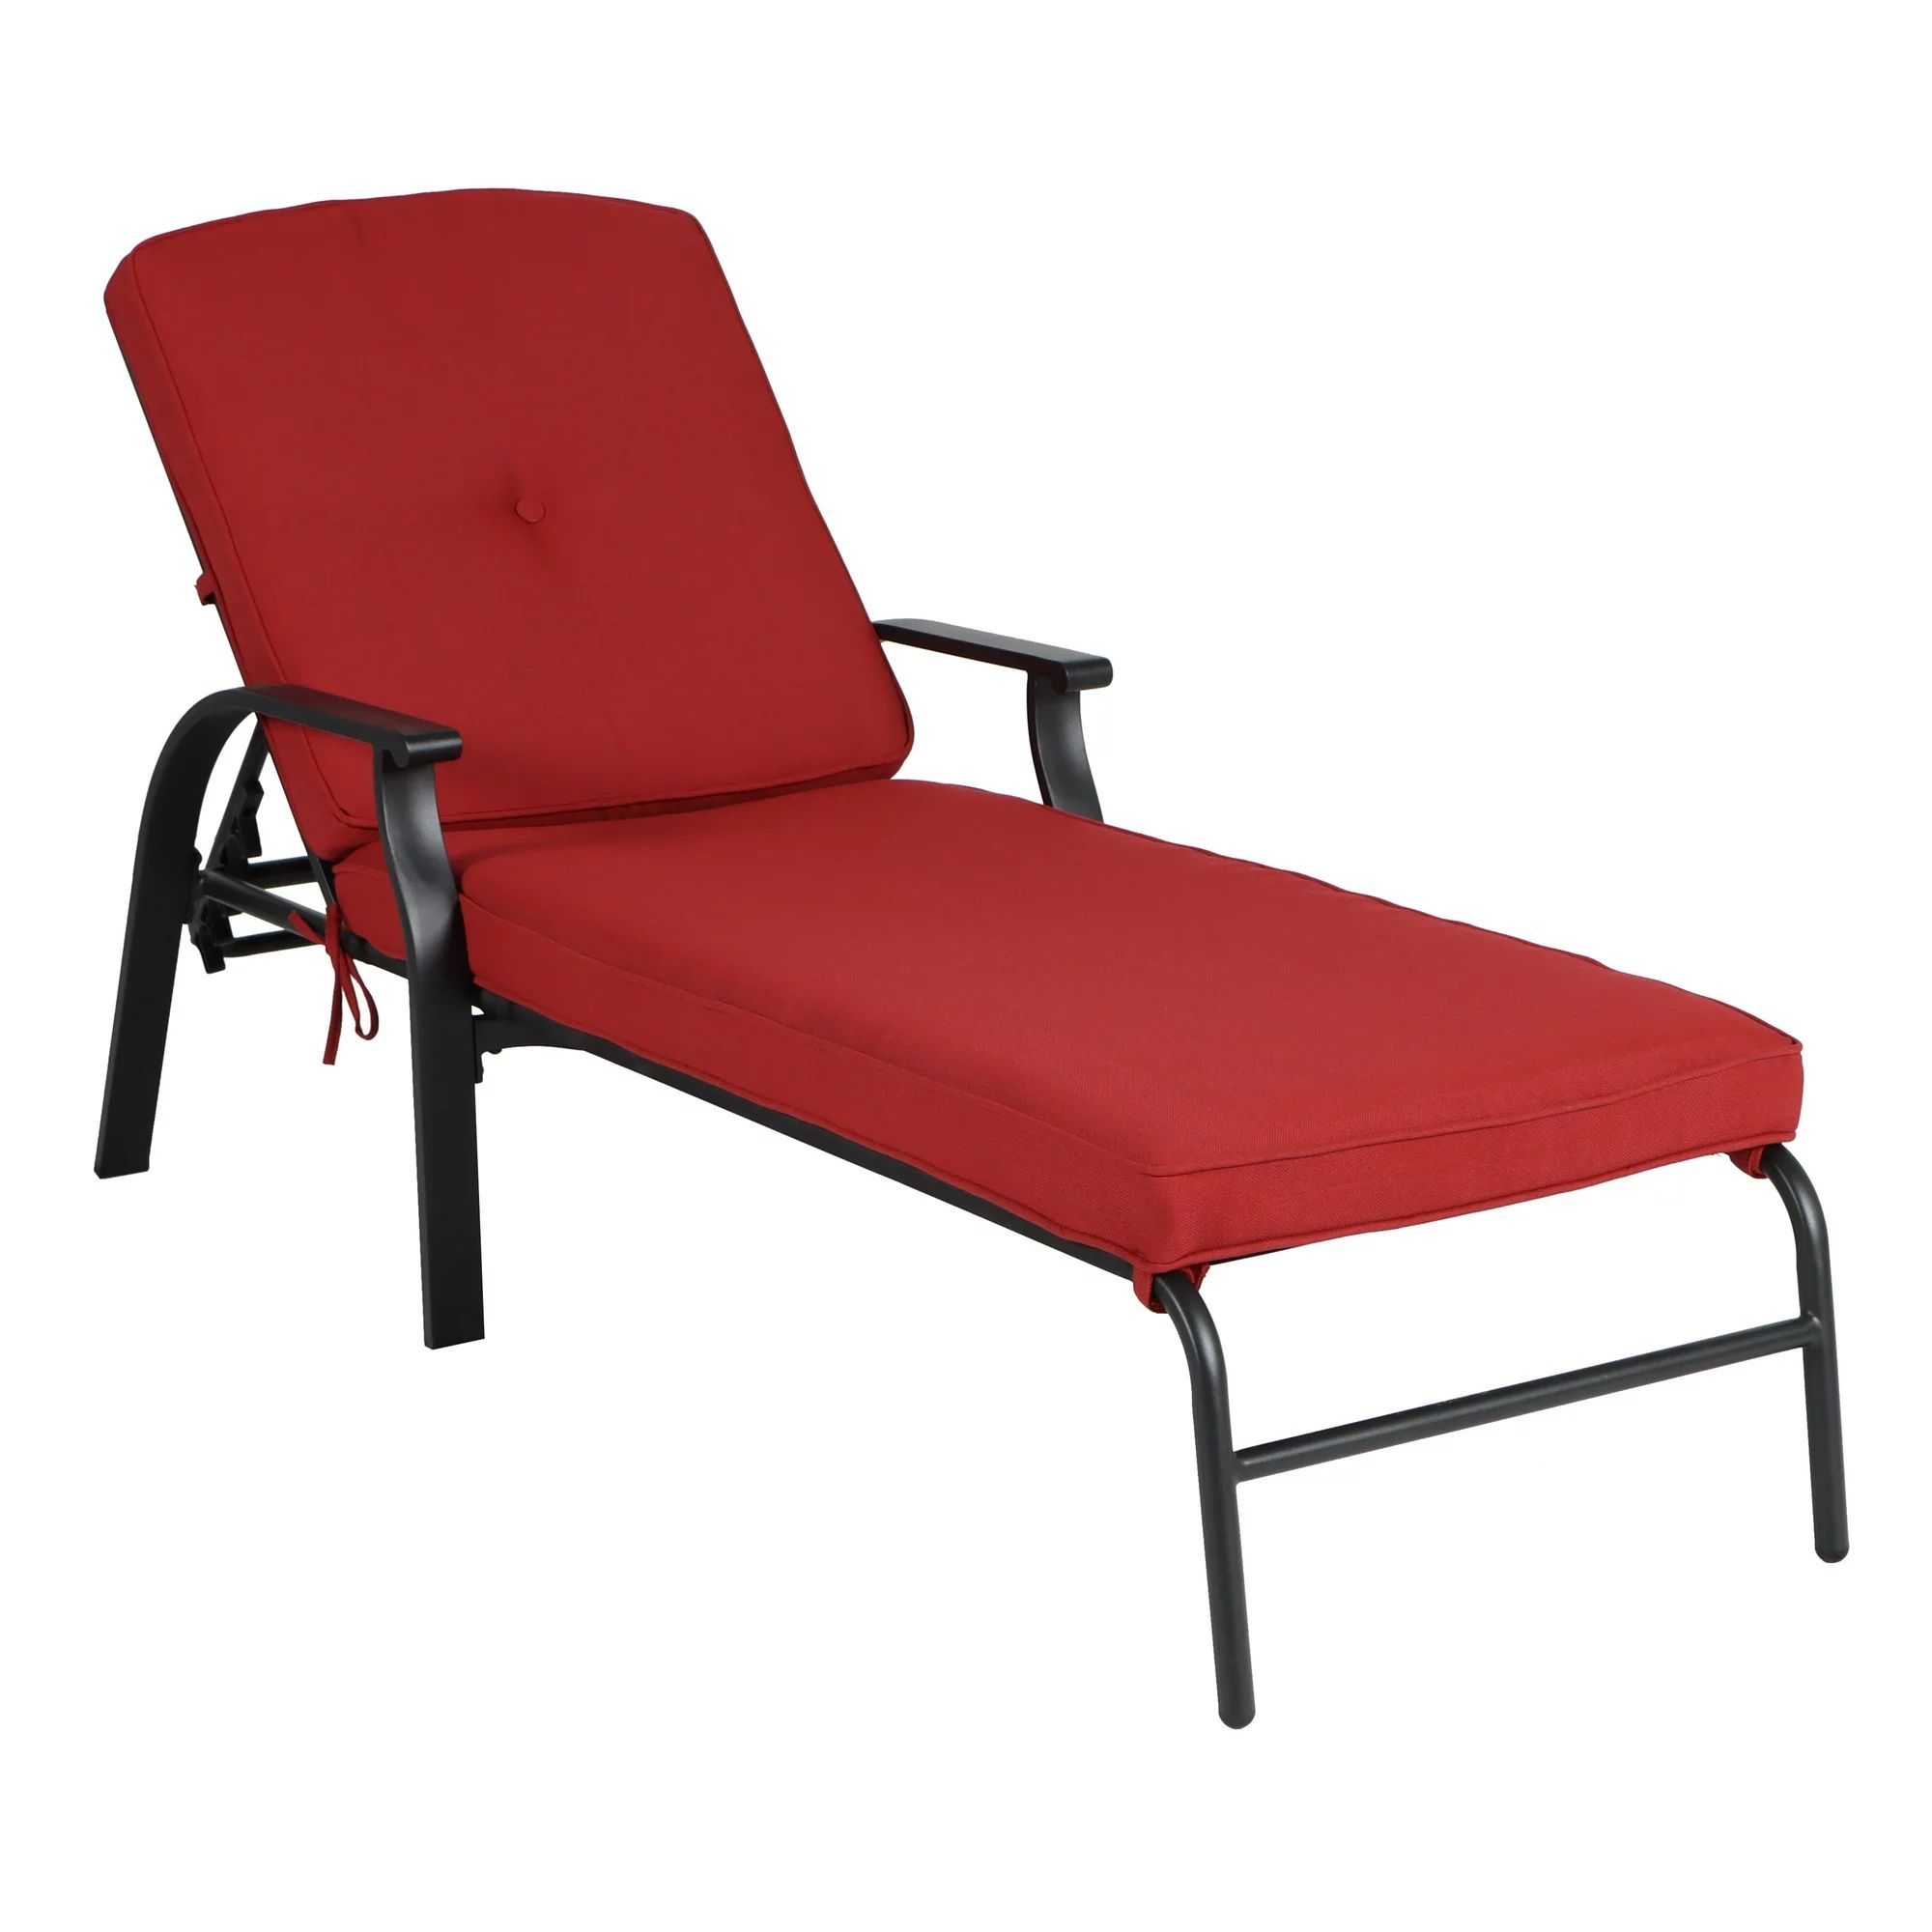 Mainstays Belden Park Cushion Steel Outdoor Chaise Lounge - Red/Black | Walmart (US)